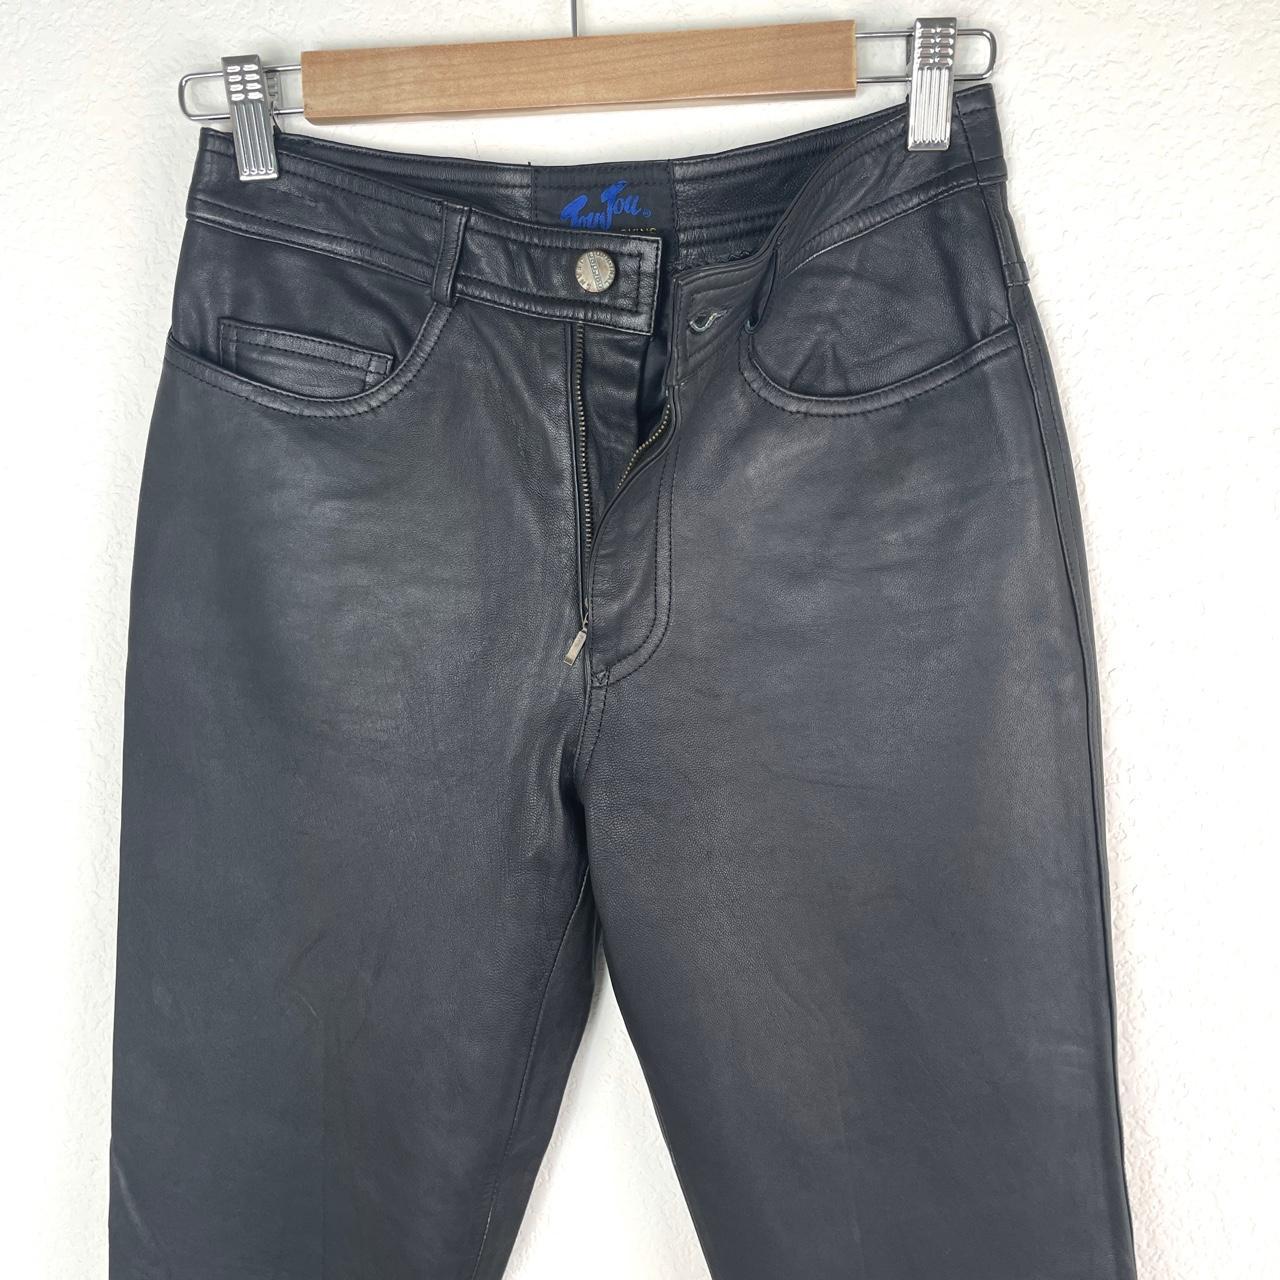 Product Image 1 - Vintage Black Leather Pants 

Amazing